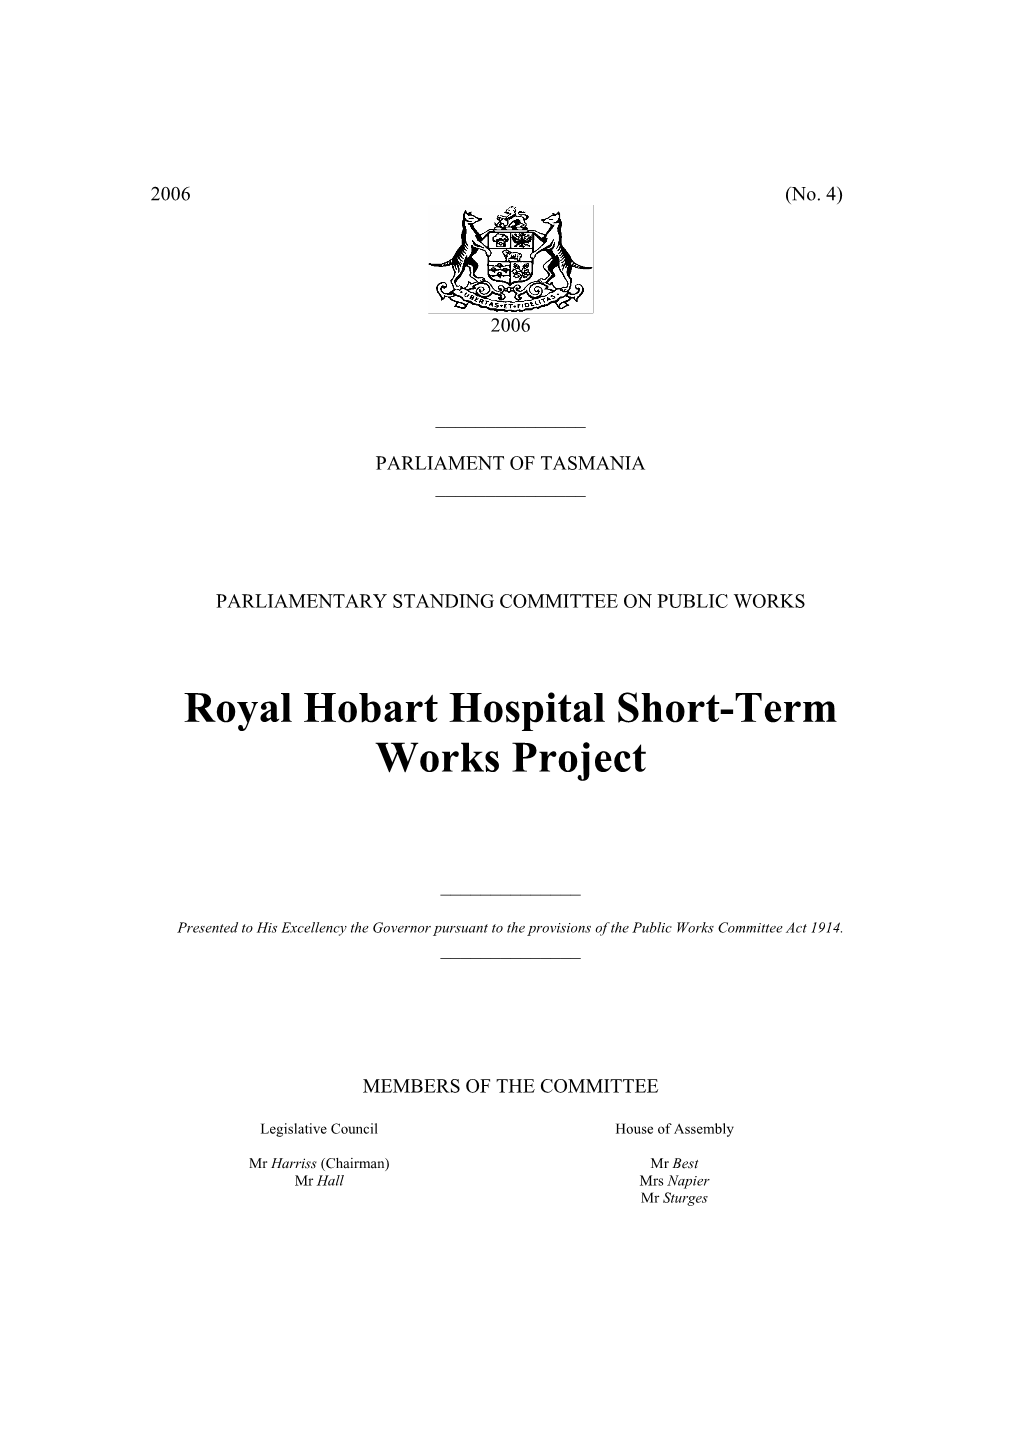 Royal Hobart Hospital Short-Term Works Project